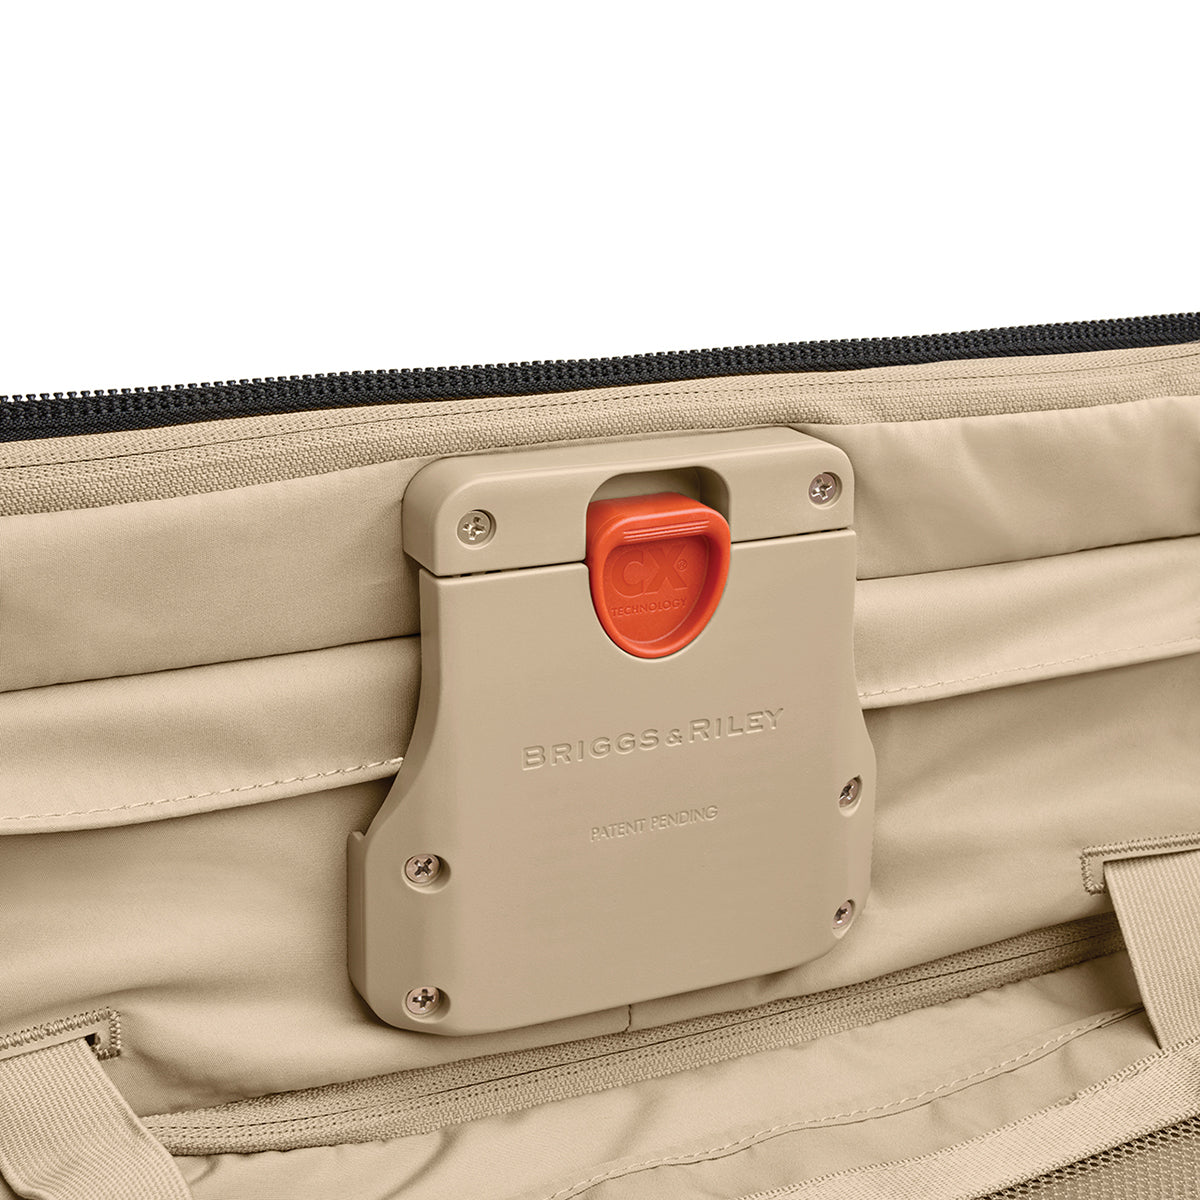 Briggs & Riley Baseline Essential 2-Wheel Carry-On Luggage